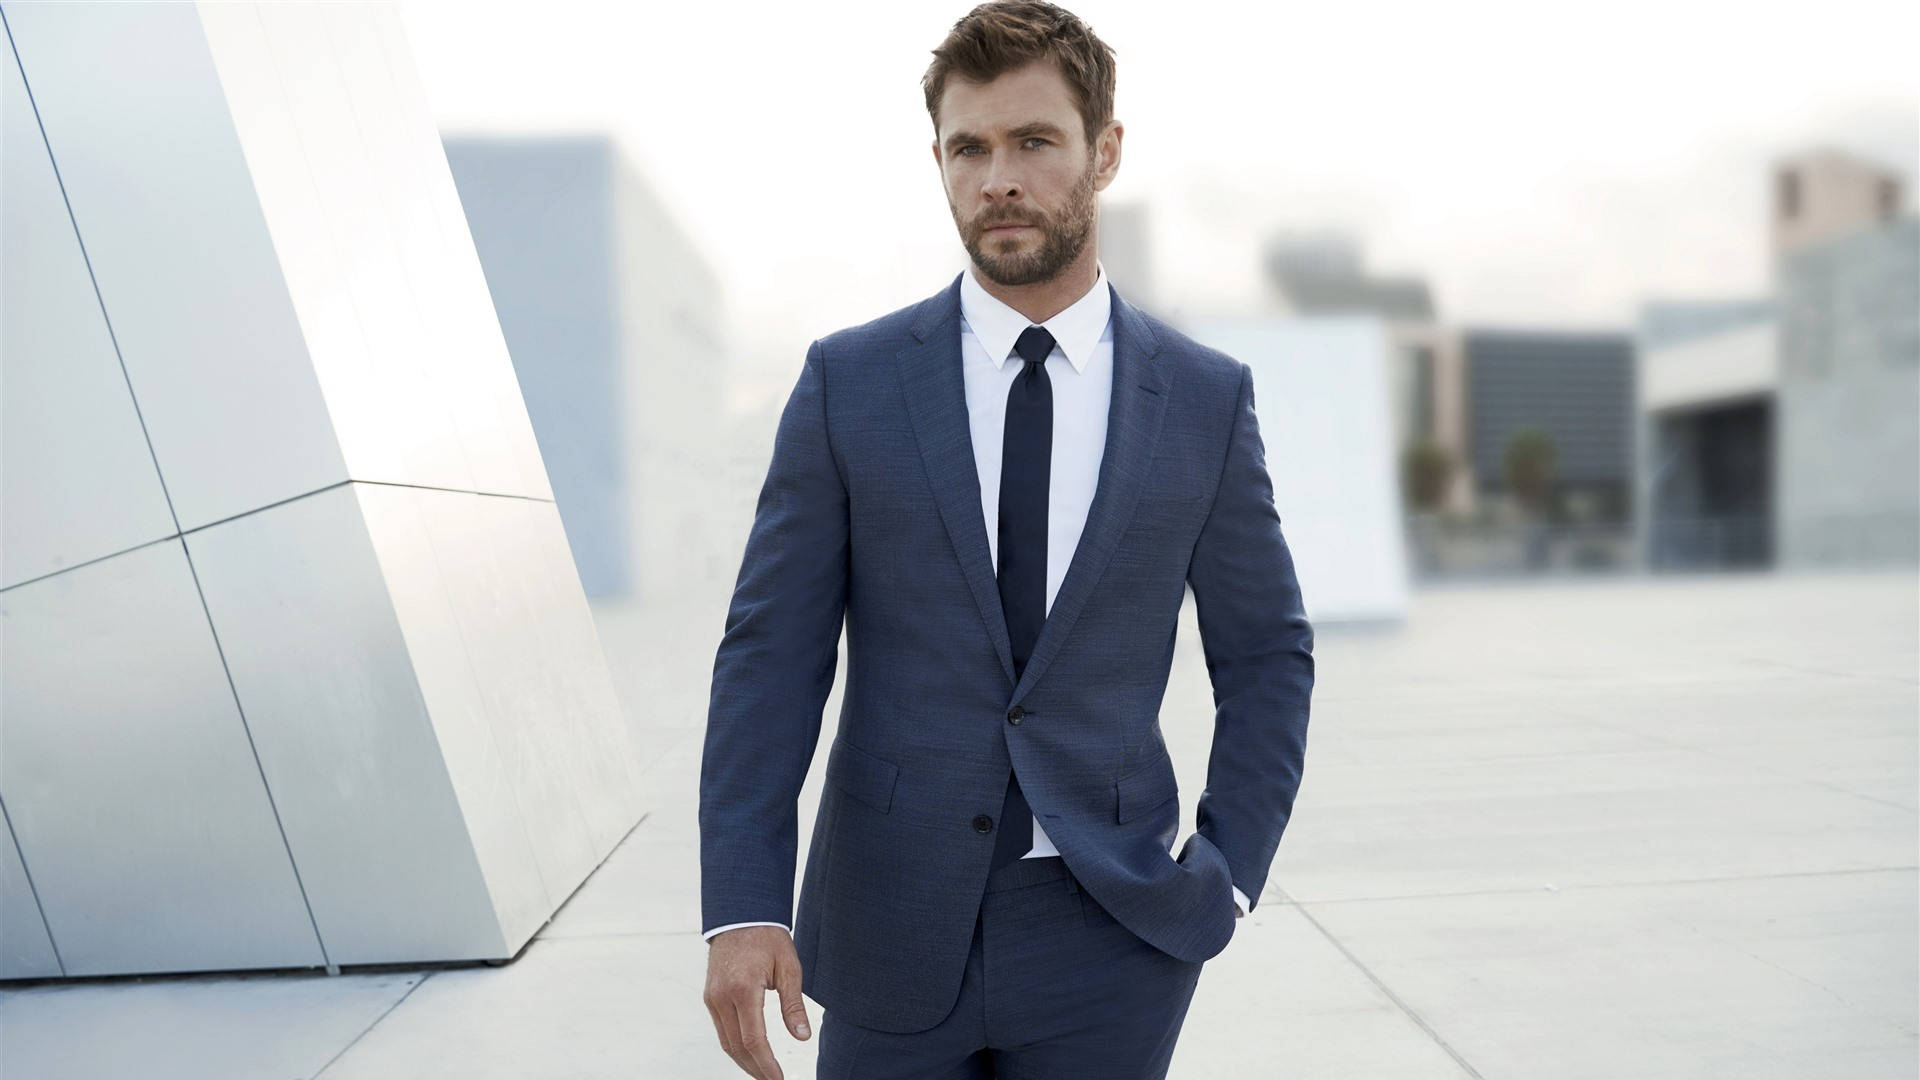 Chris Hemsworth In Suit Background